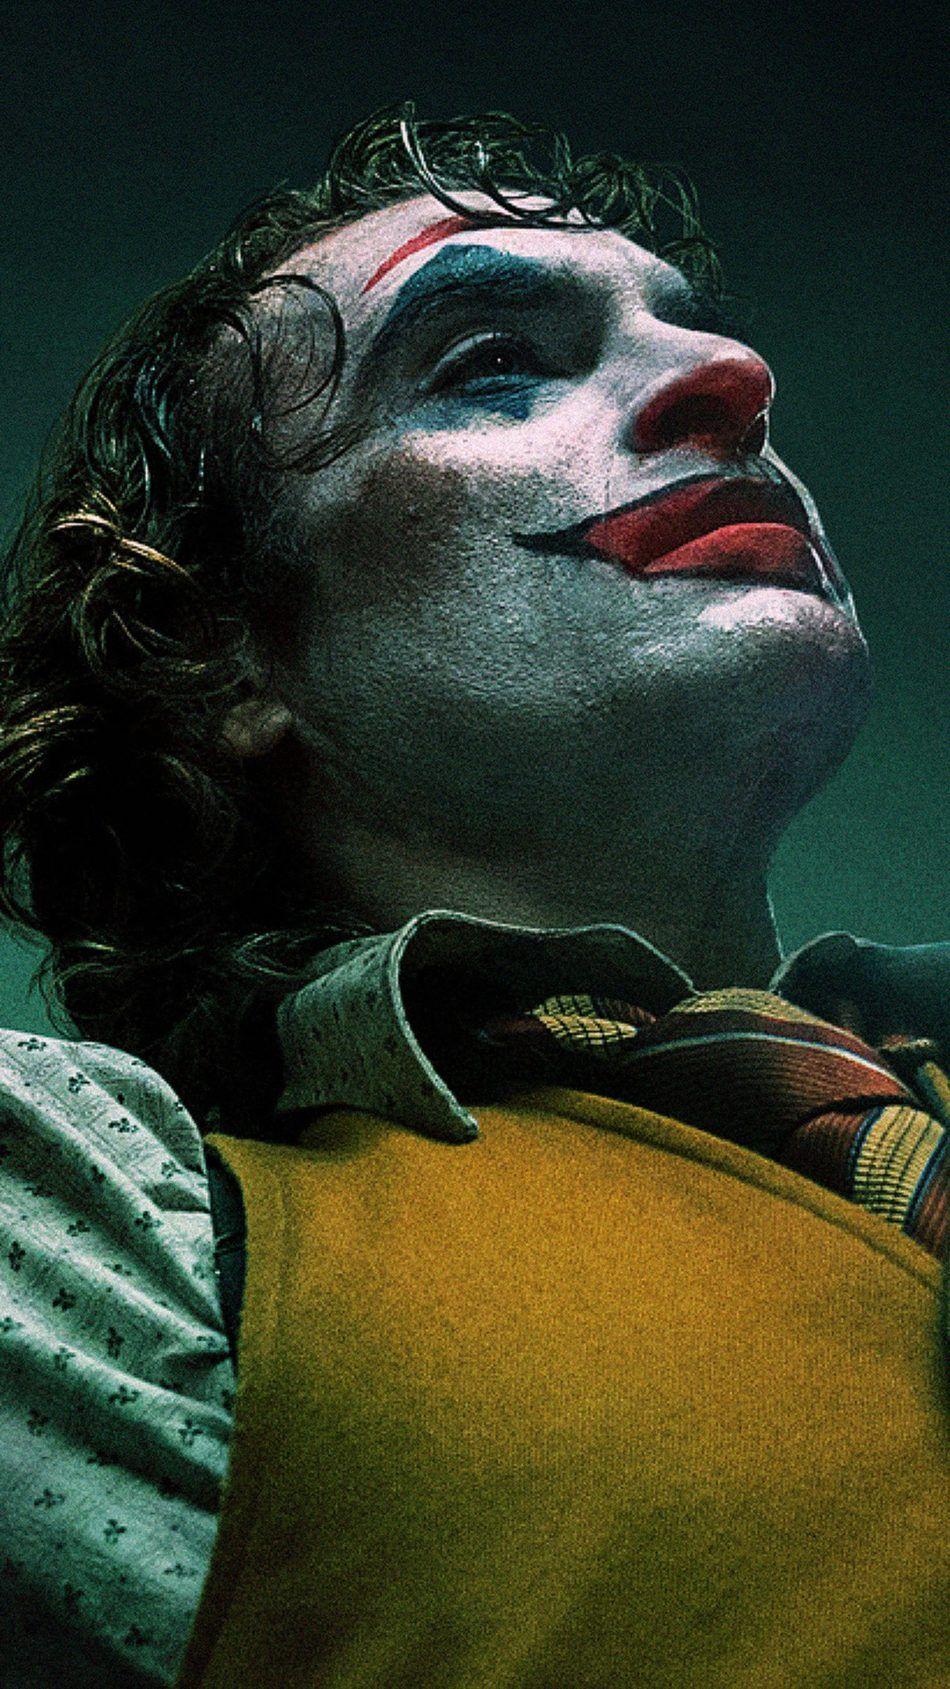 Joaquin Phoenix Joker 2019 Movie 4K Ultra HD Mobile Wallpaper. Joker image, Joker poster, Joker HD wallpaper